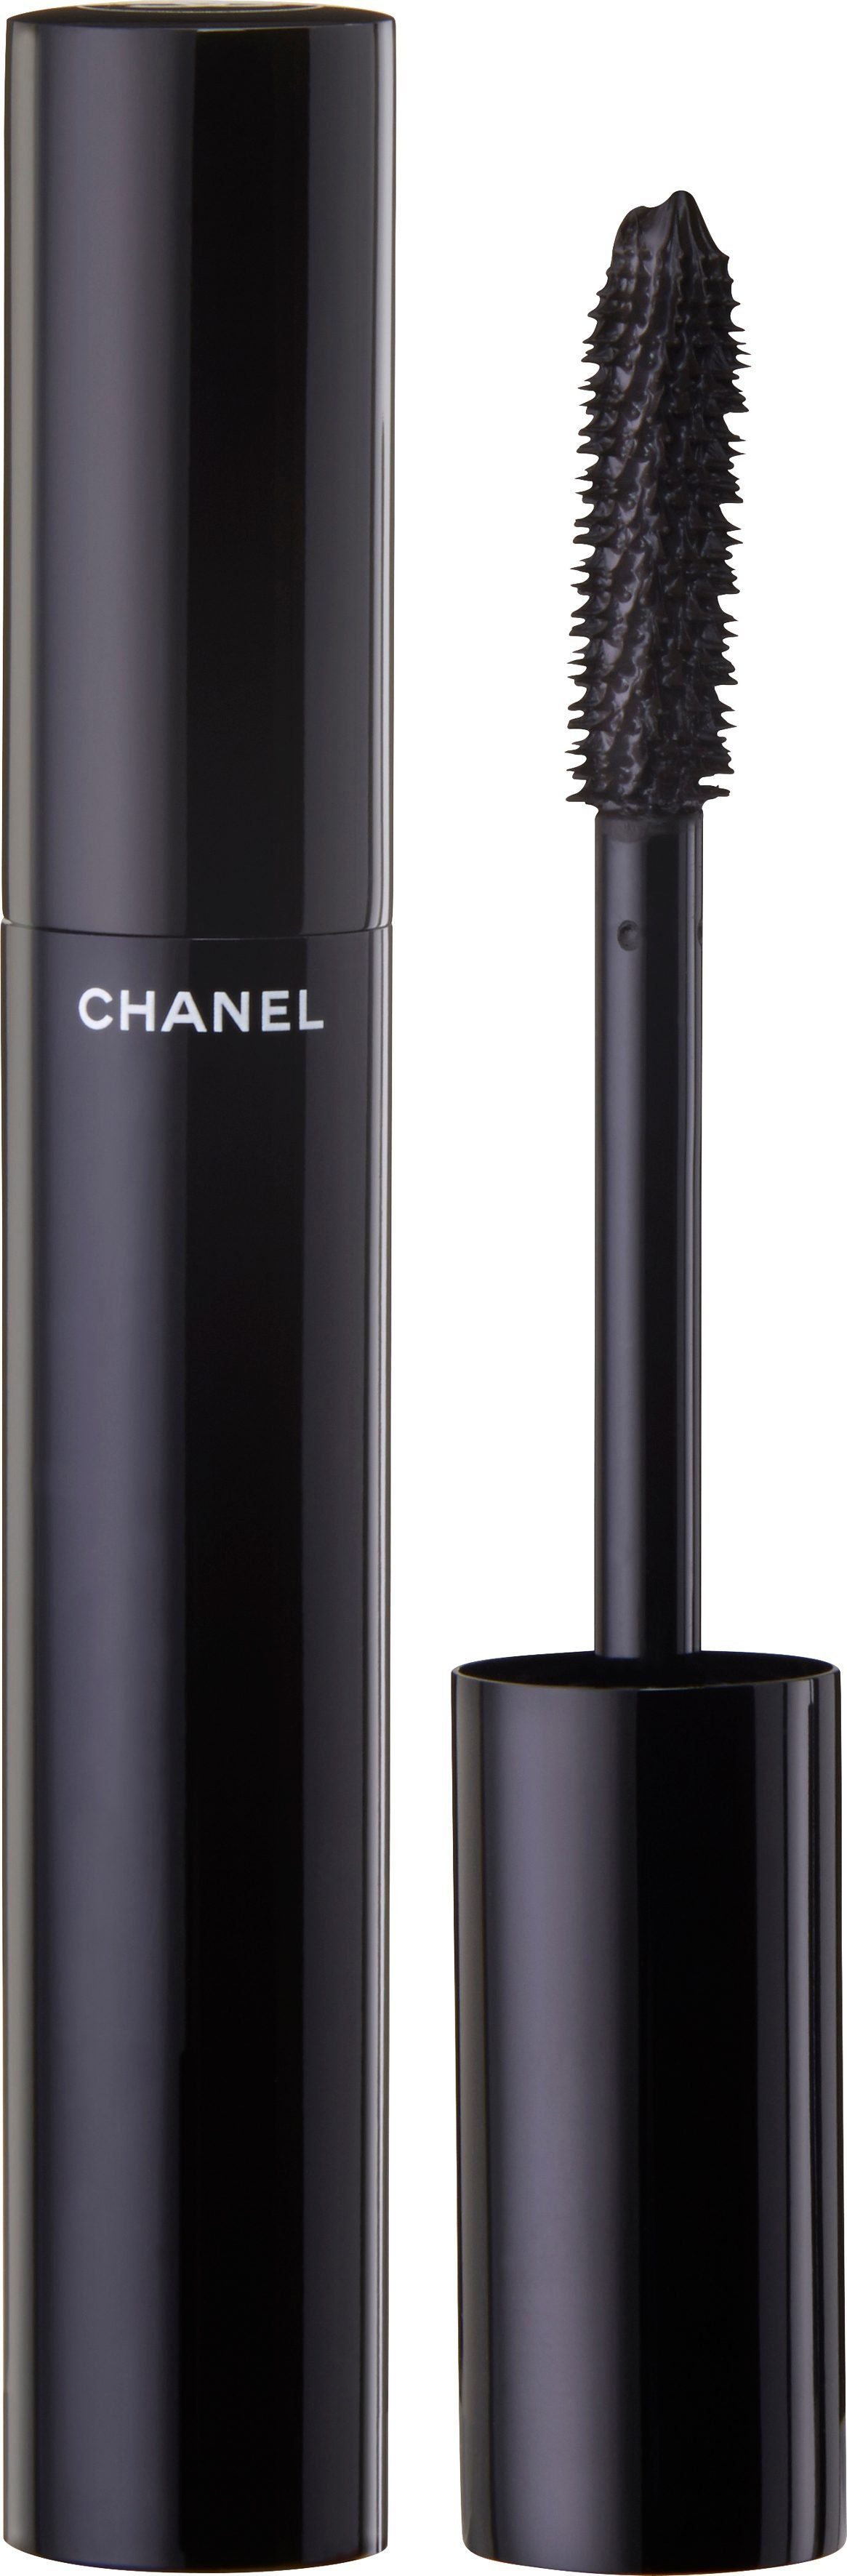 Bürste Chanel, Innovative Le Mascara de Volume CHANEL